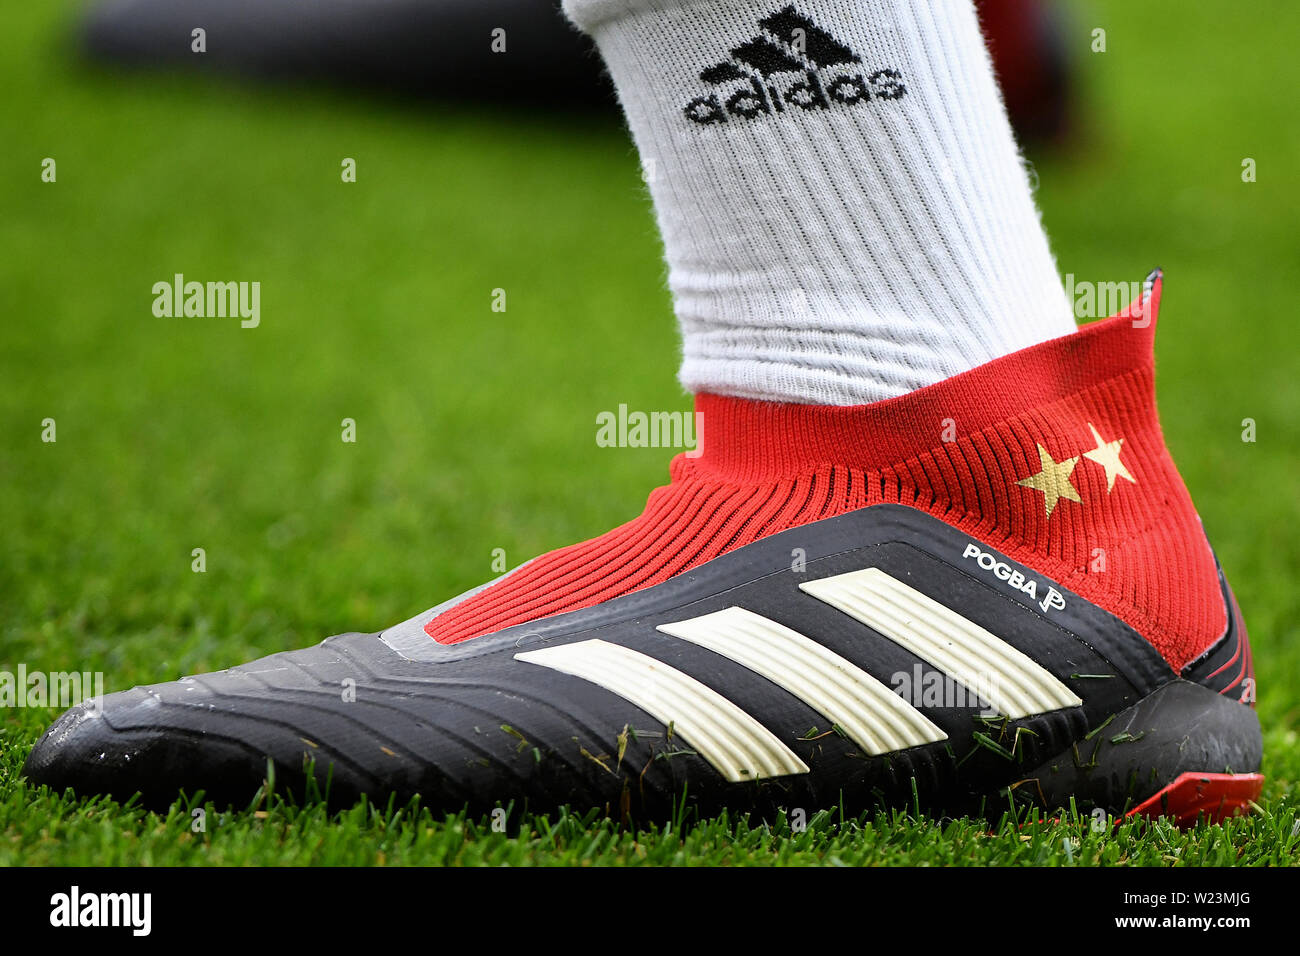 Las Adidas botas Paul Pogba del Manchester United - Brighton & Hove v Manchester United, Premier League, Amex Stadium, Brighton - de agosto de 2018 Fotografía de stock Alamy